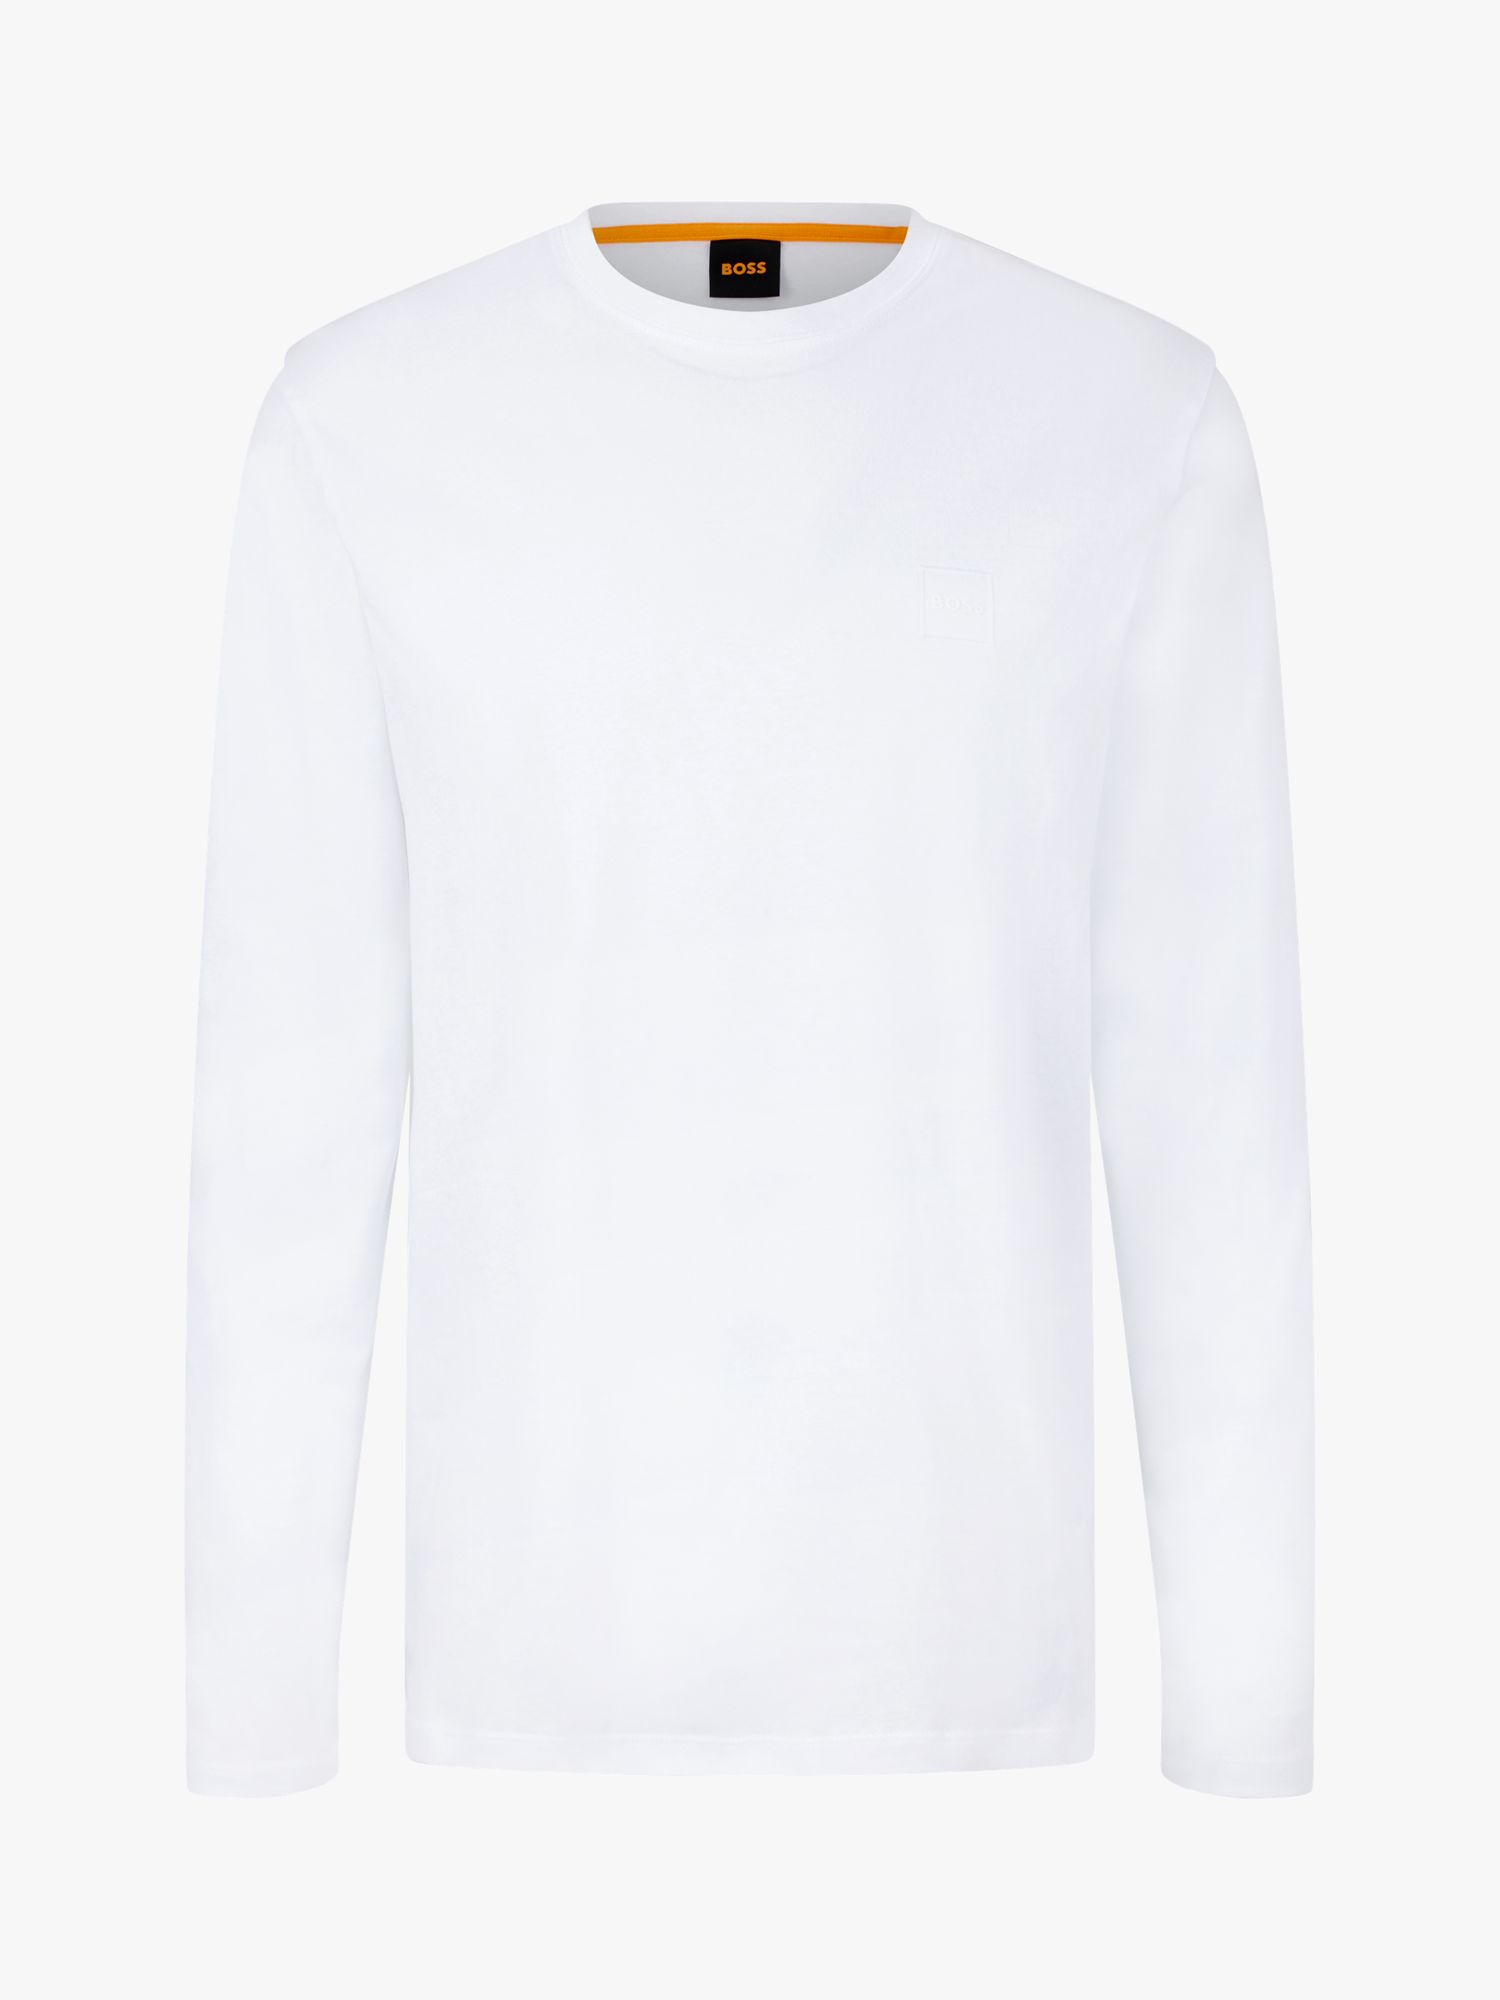 BOSS Tacks Long Sleeve T-Shirt, White at John Lewis & Partners